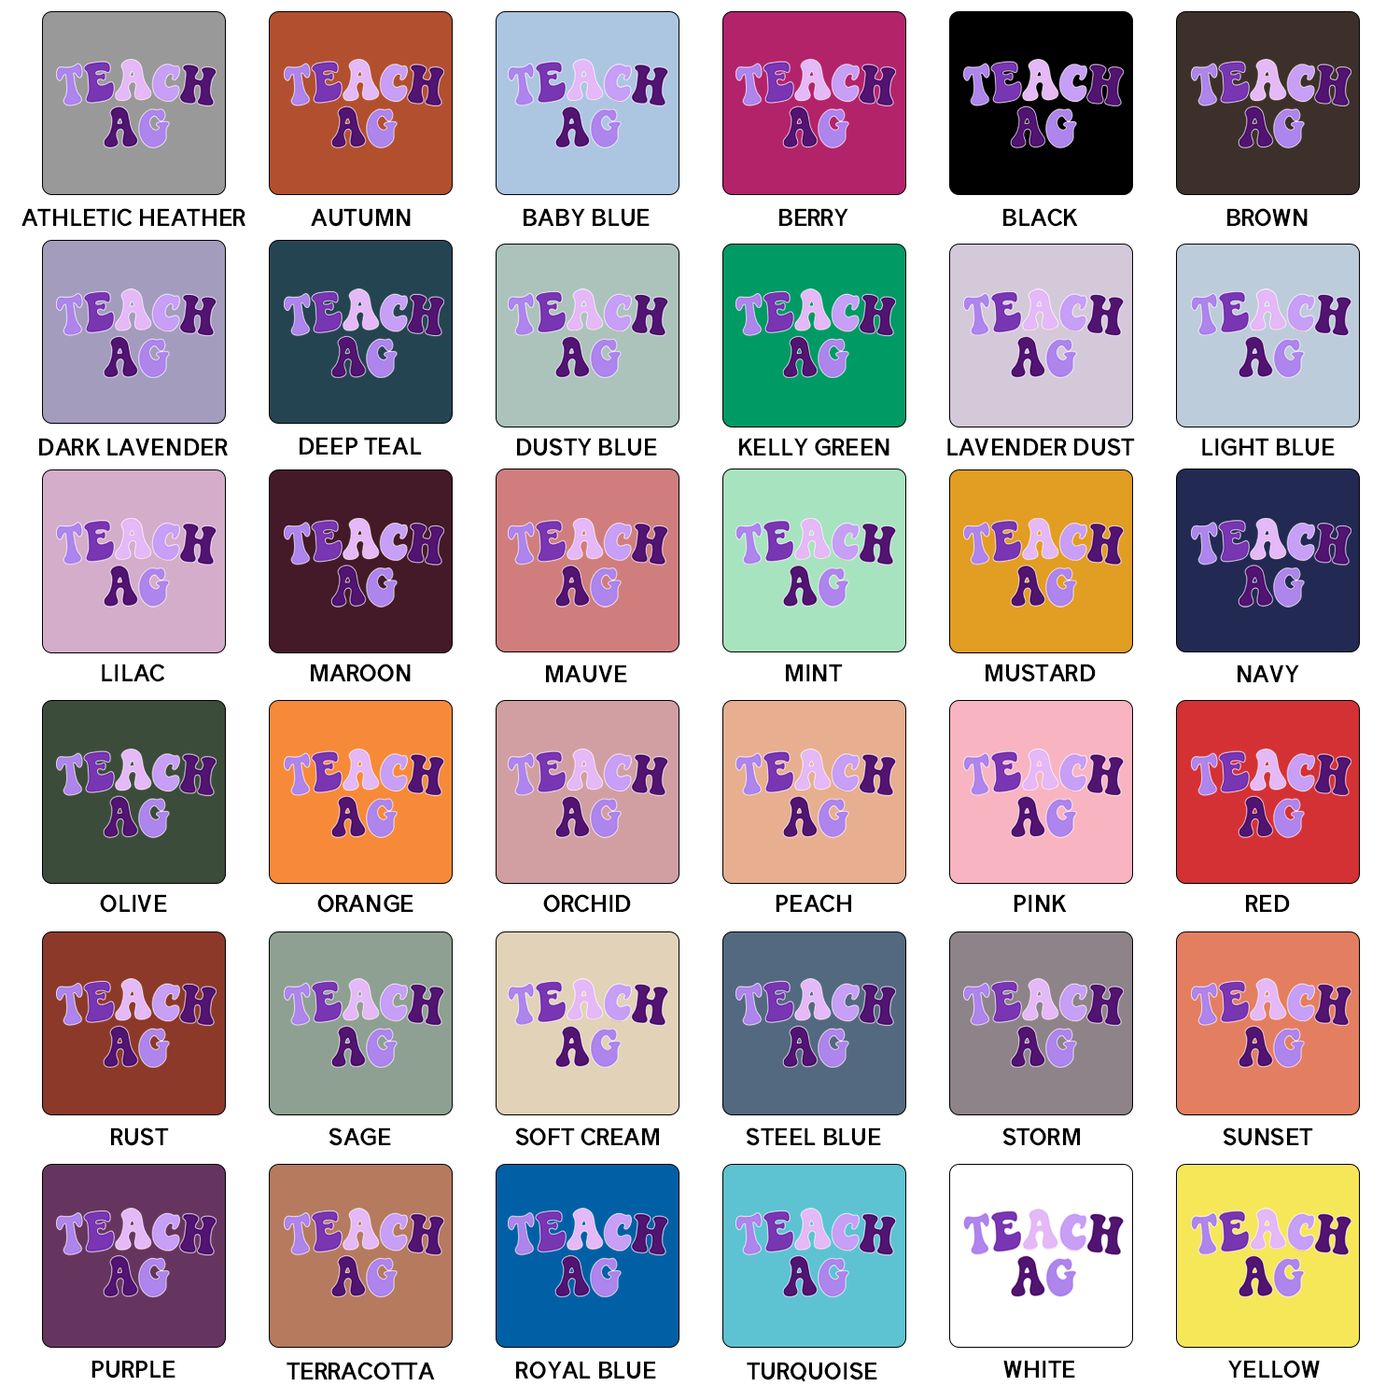 Purple Teach Ag T-Shirt (XS-4XL) - Multiple Colors!